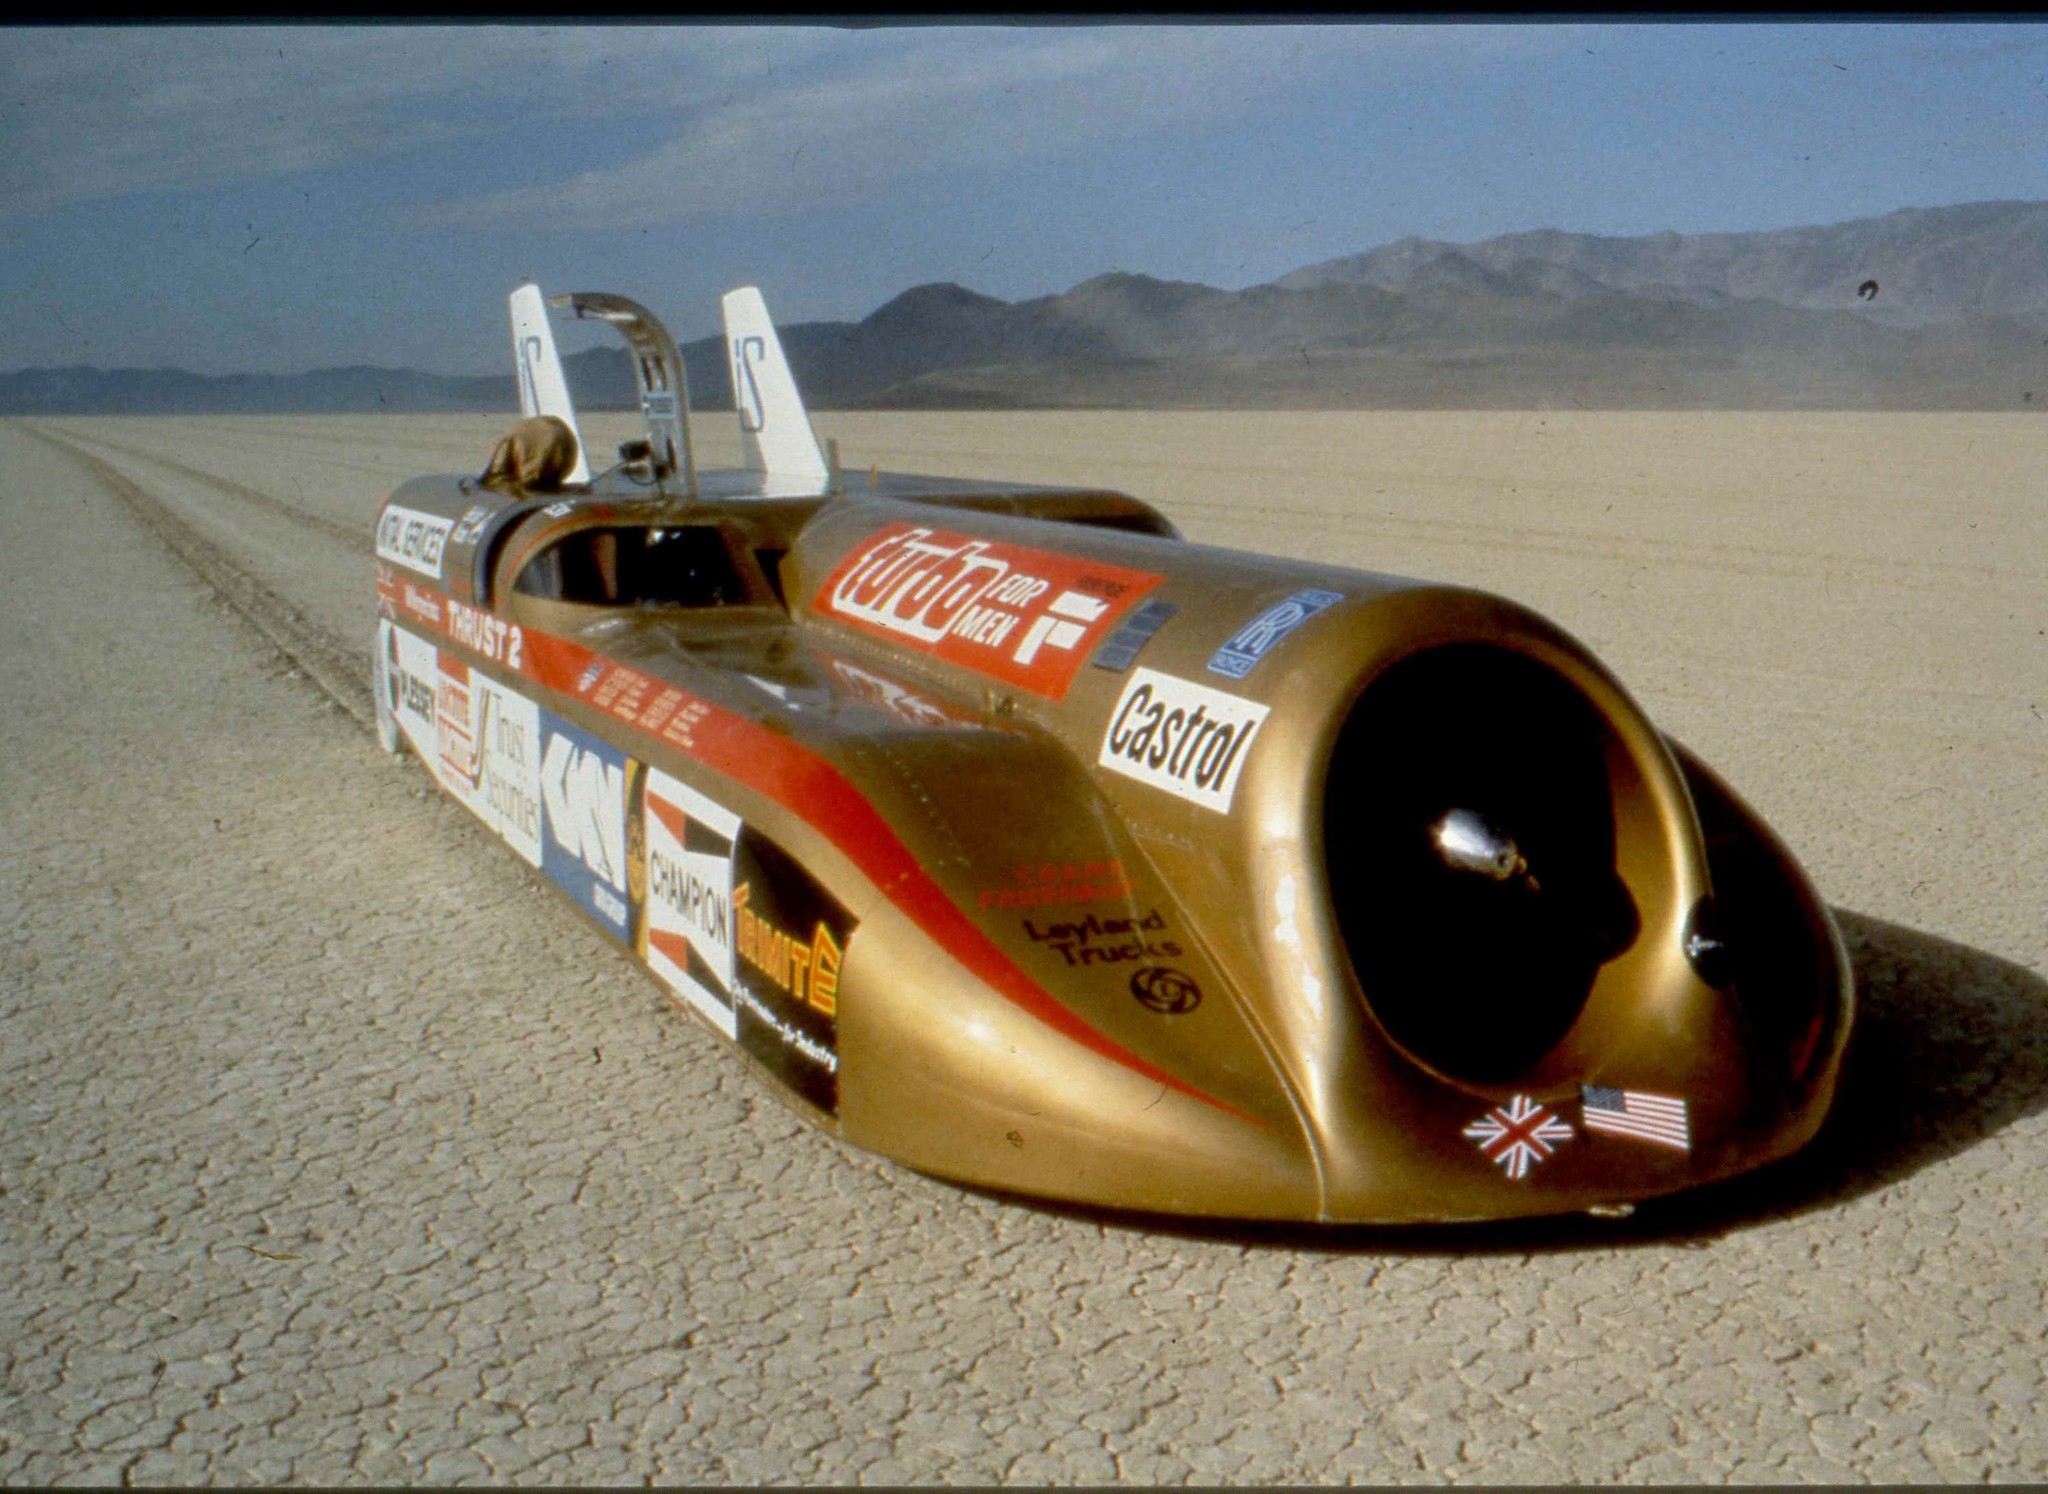 2 1000 километров. Thrust SSC (1228 км/ч ).. Энди Грин рекорд скорости. Машина Bloodhound SSC. Энди Грин на Thrust SSC.